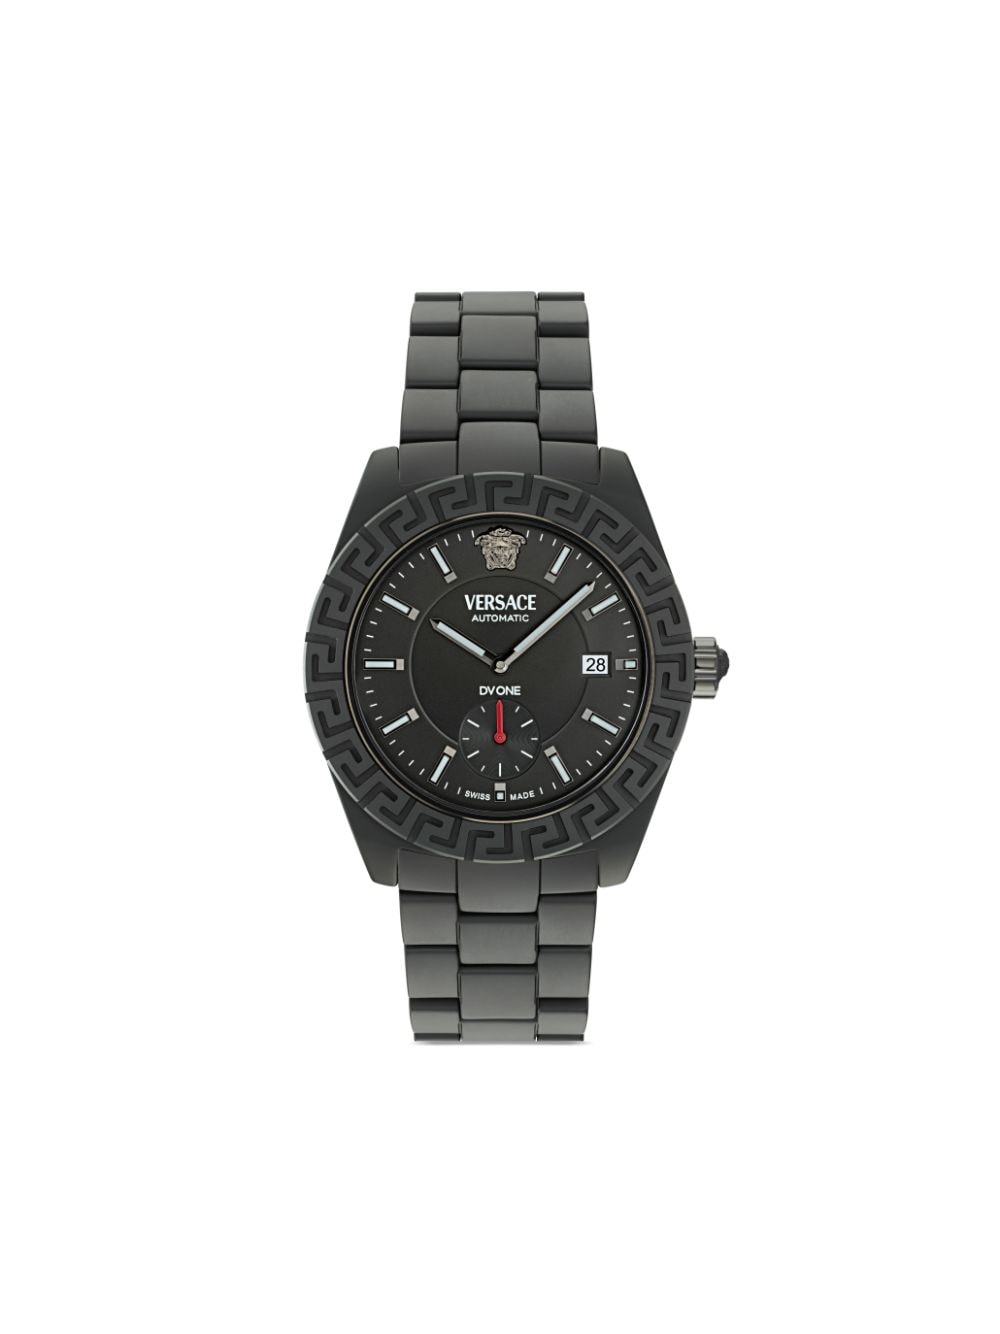 Versace DV One horloge - Zwart